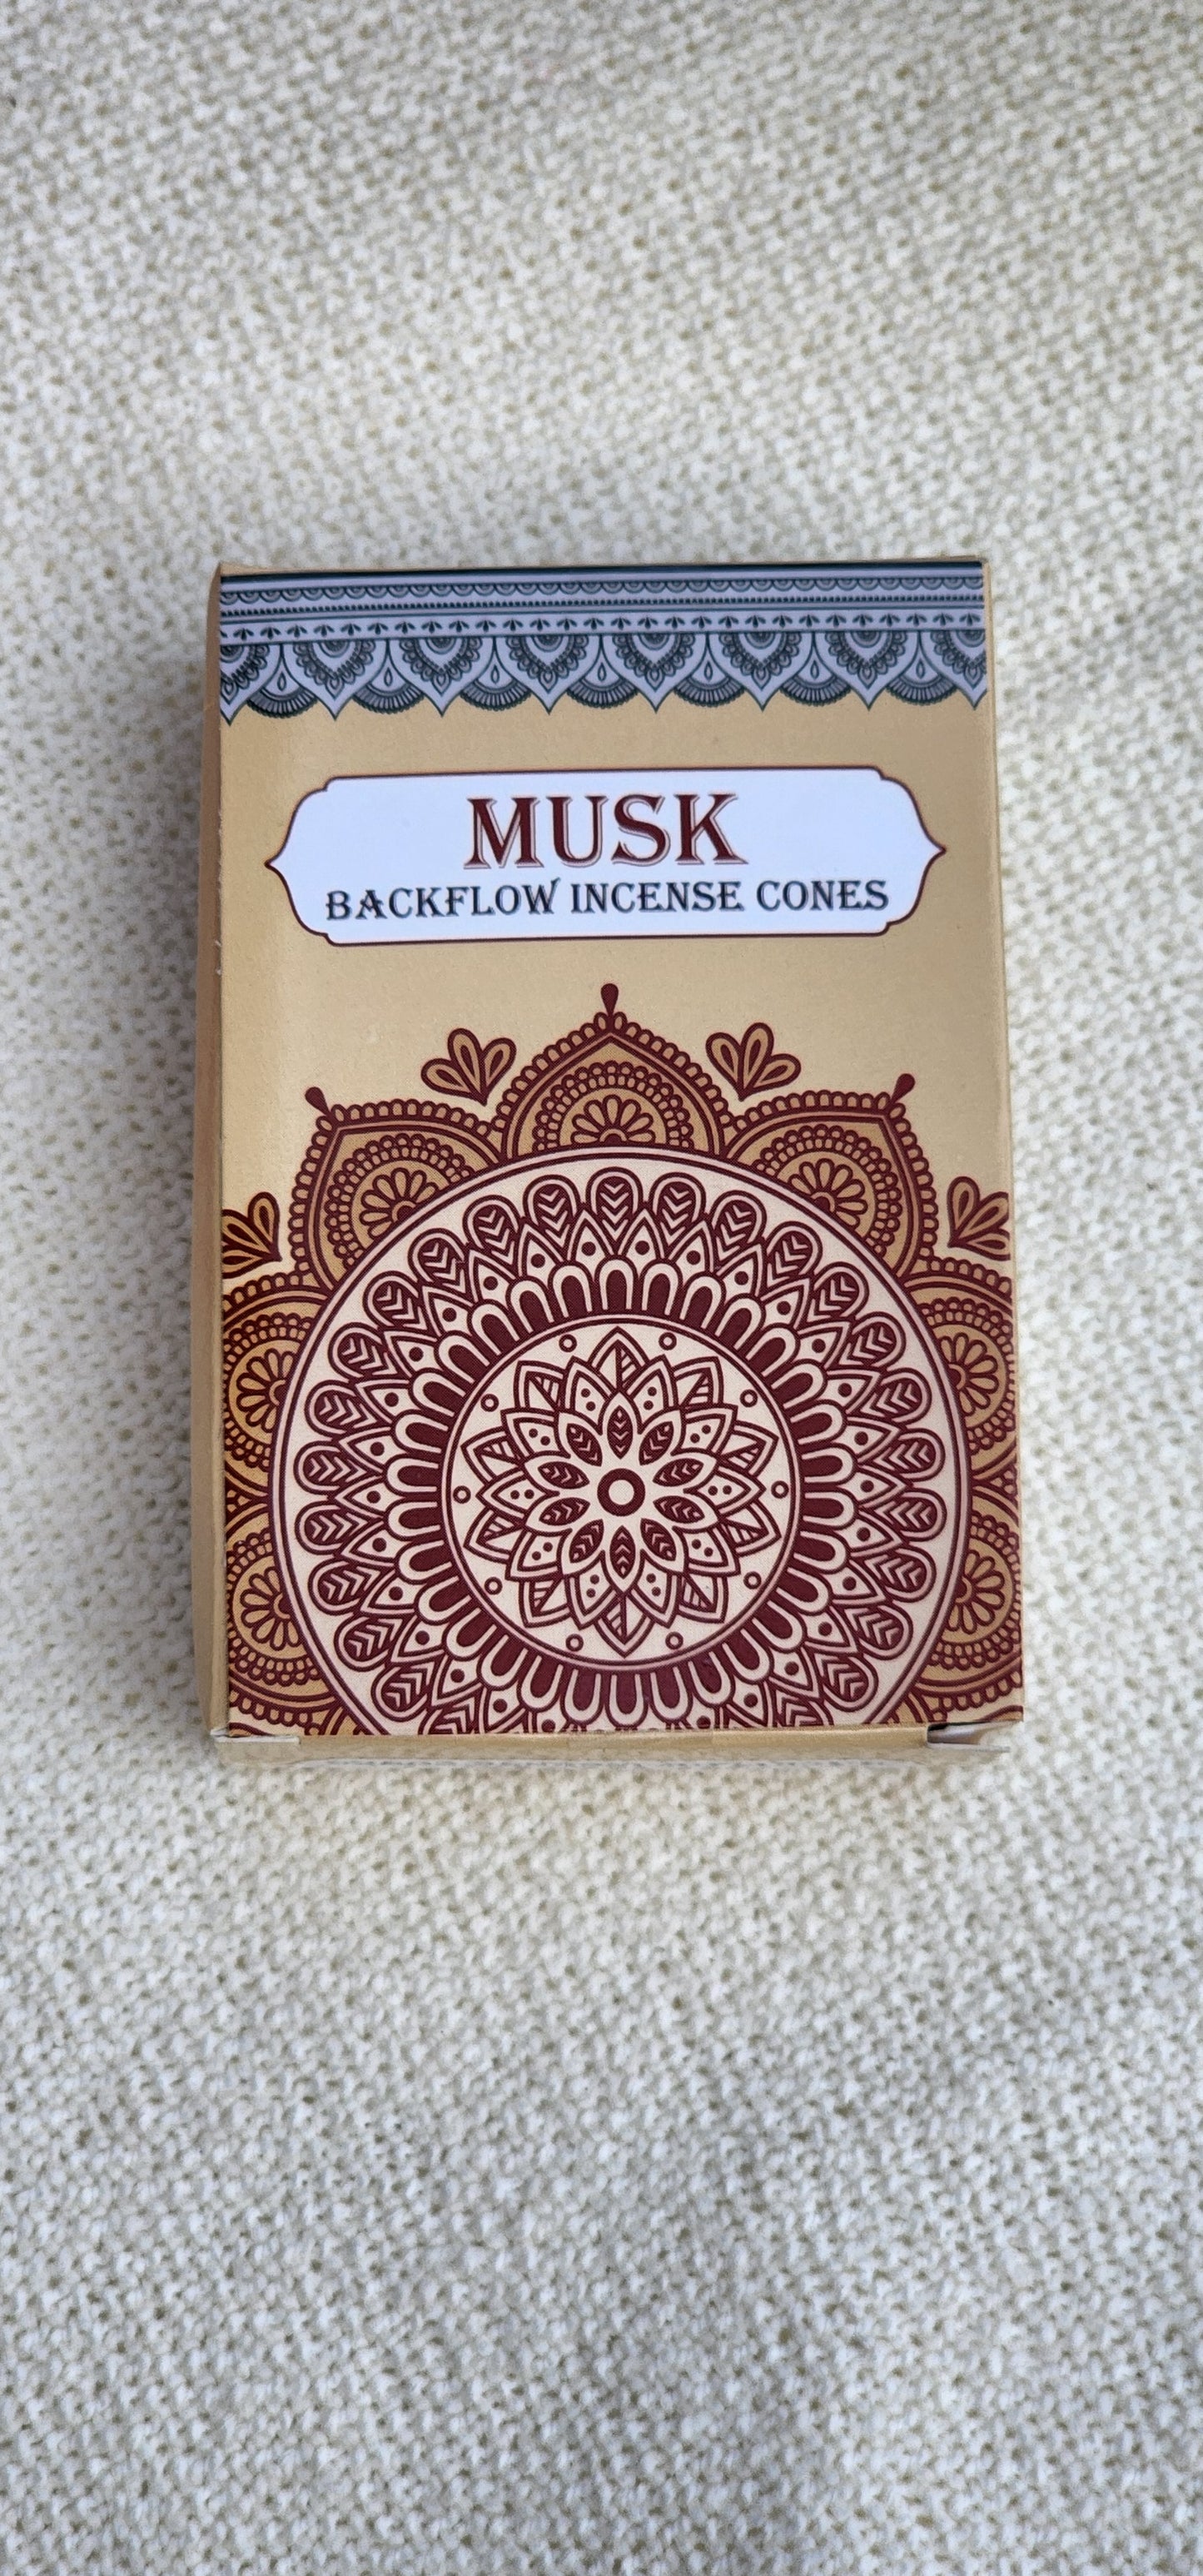 Backflow incense Cones| Musk